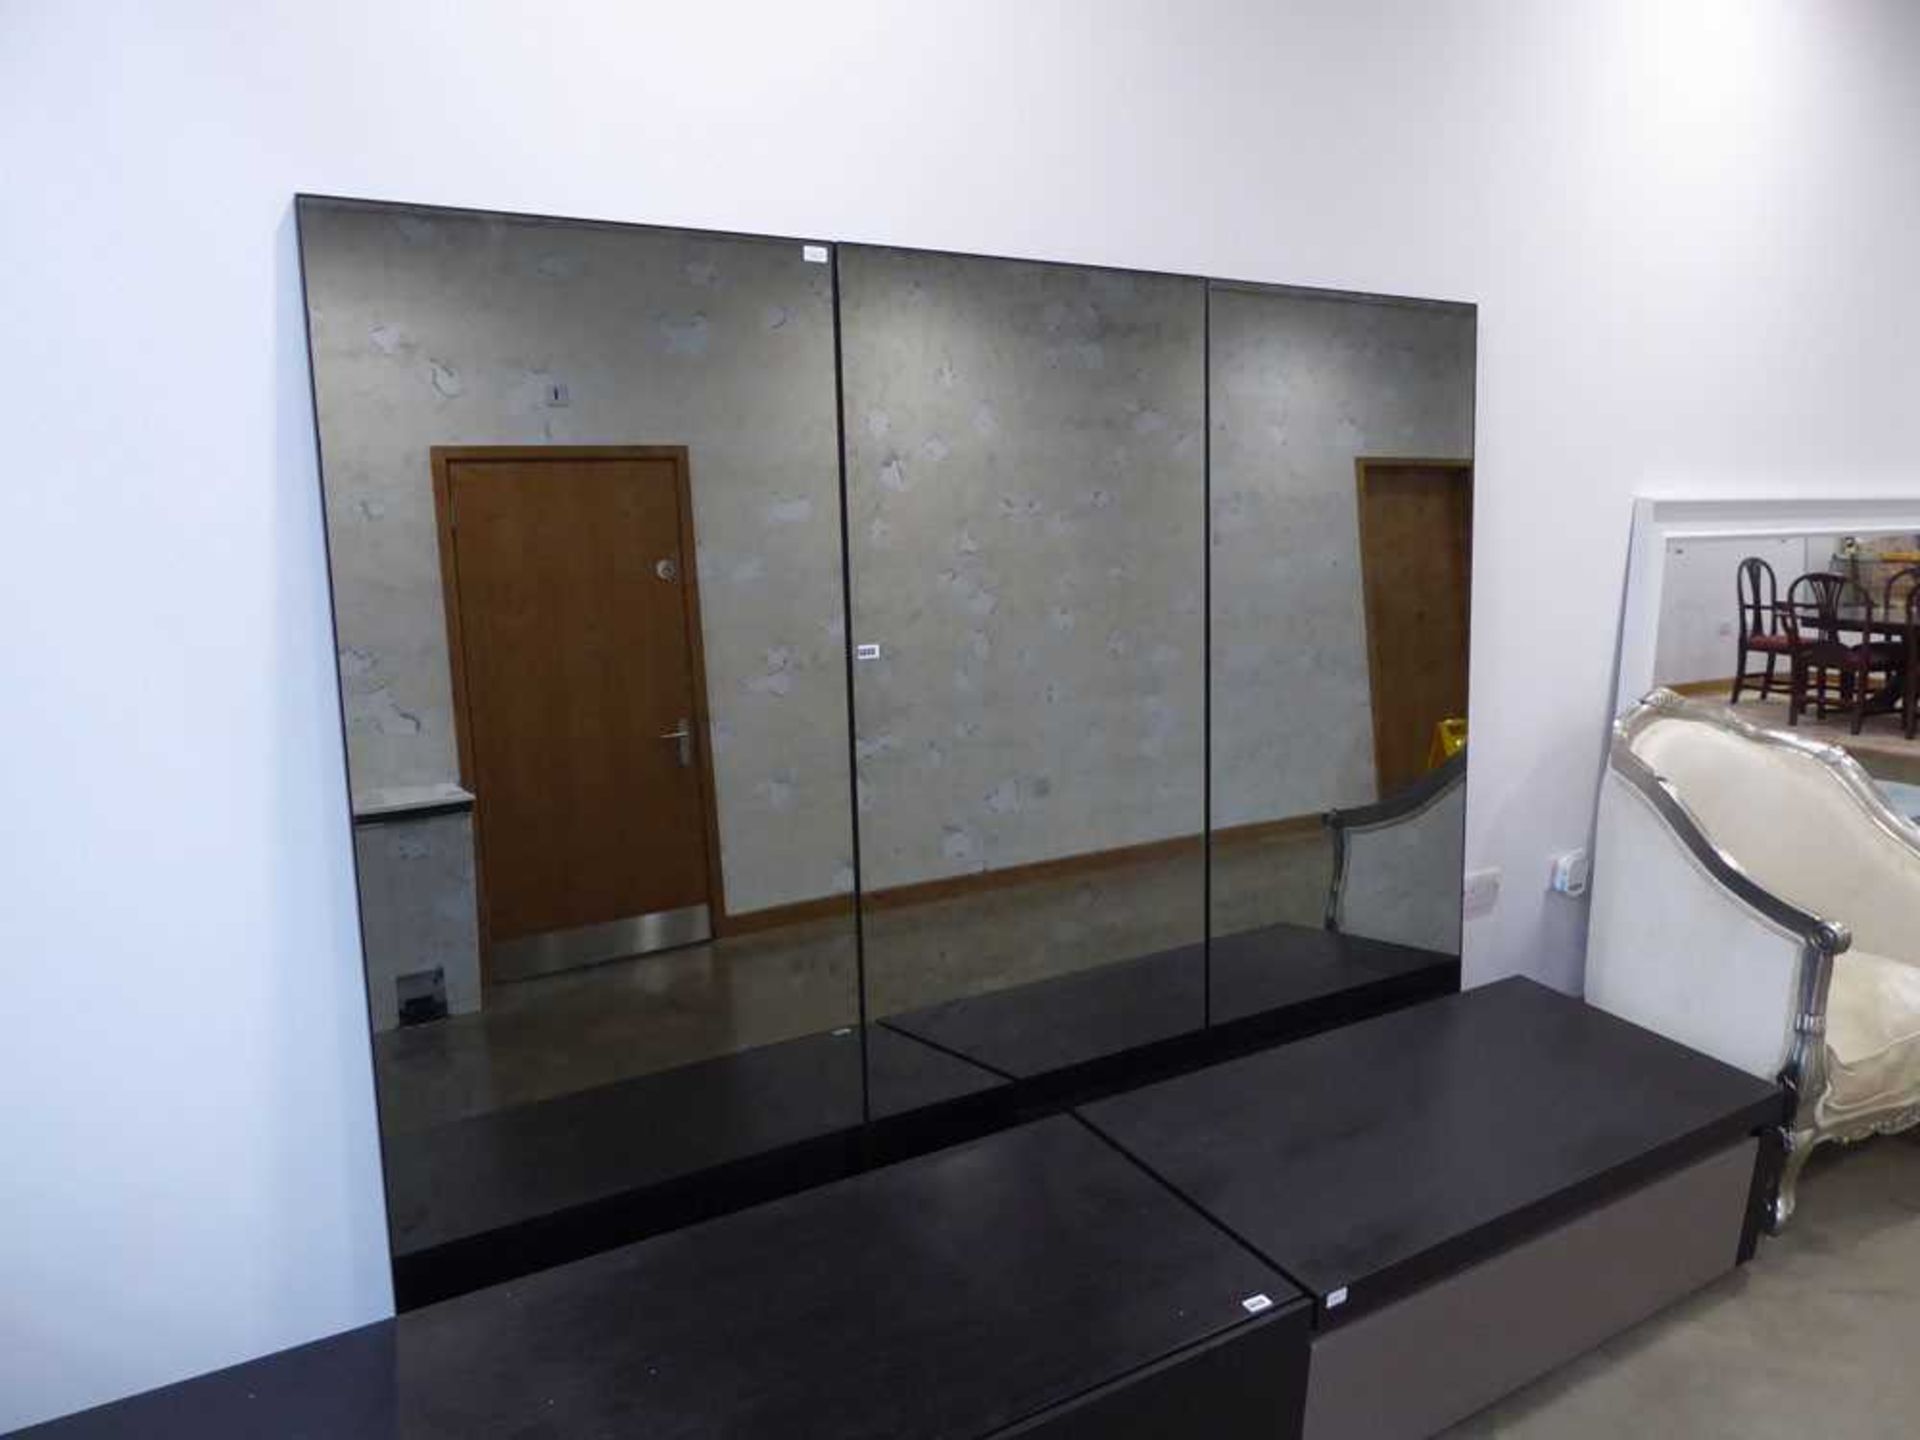 3 large rectangular smoked glass mirrors